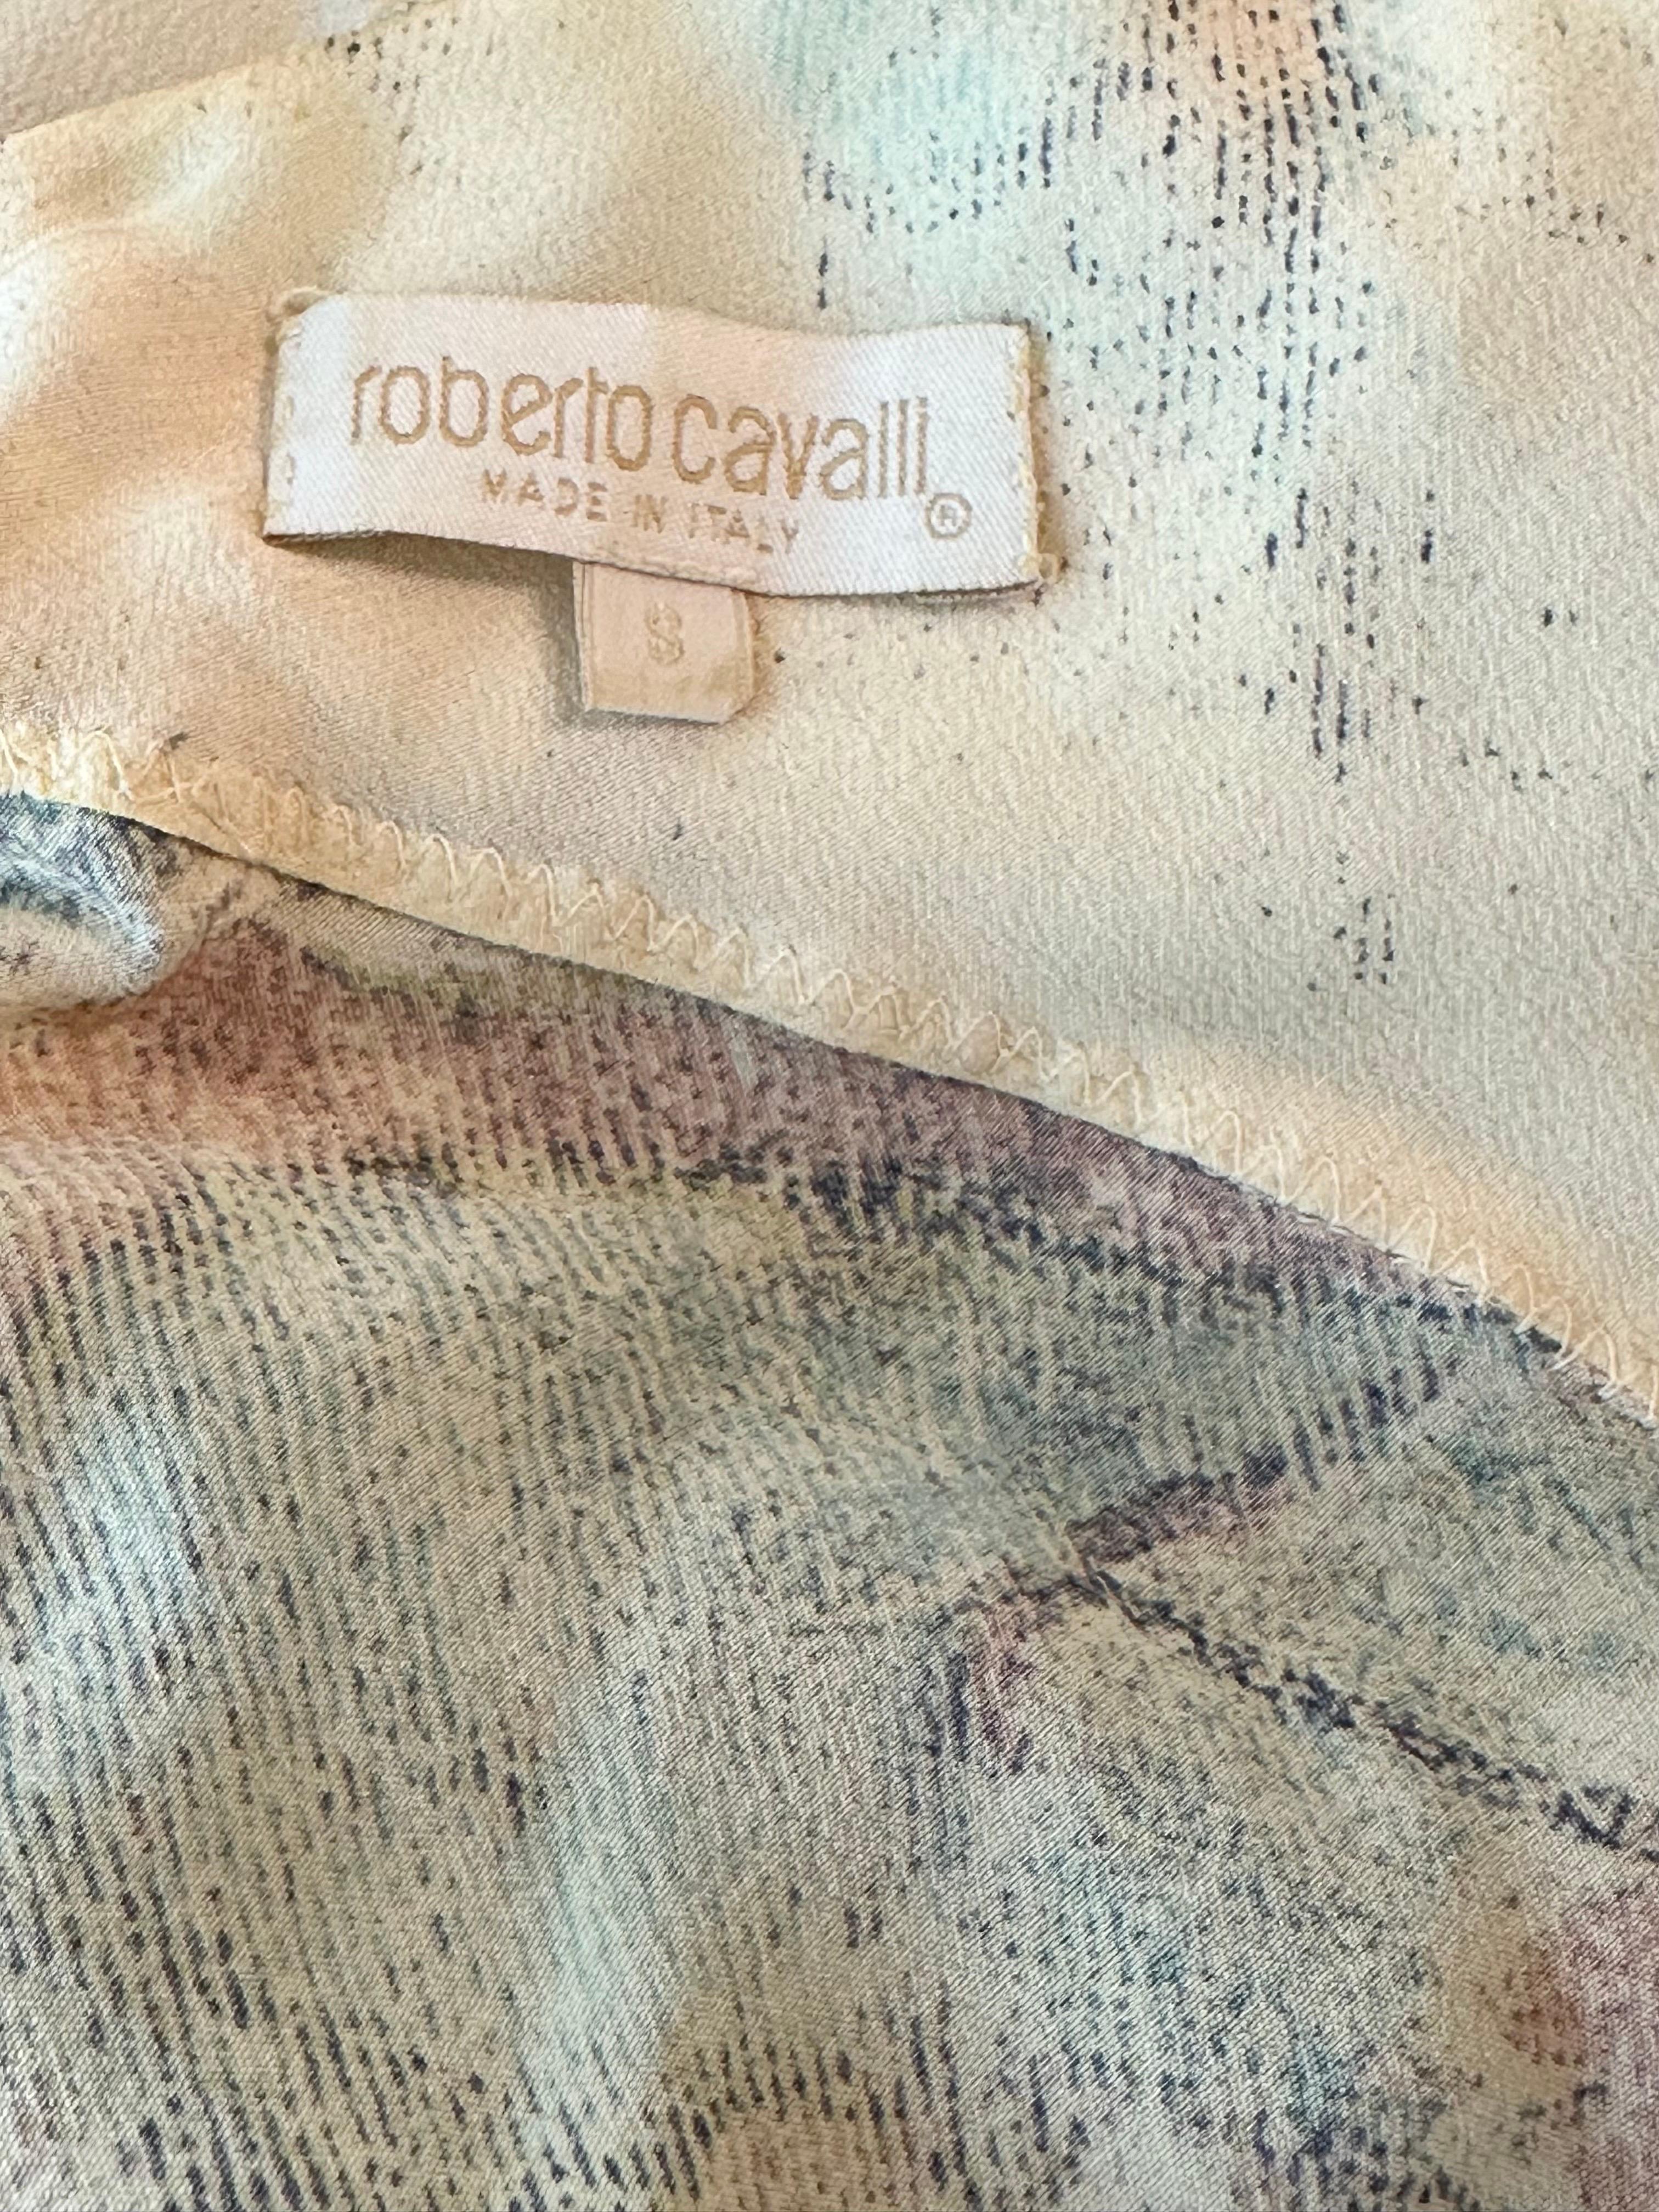 Roberto Cavalli S/S 2002 Silk Abstract Print Lace Up Slip Evening Midi Dress  For Sale 3